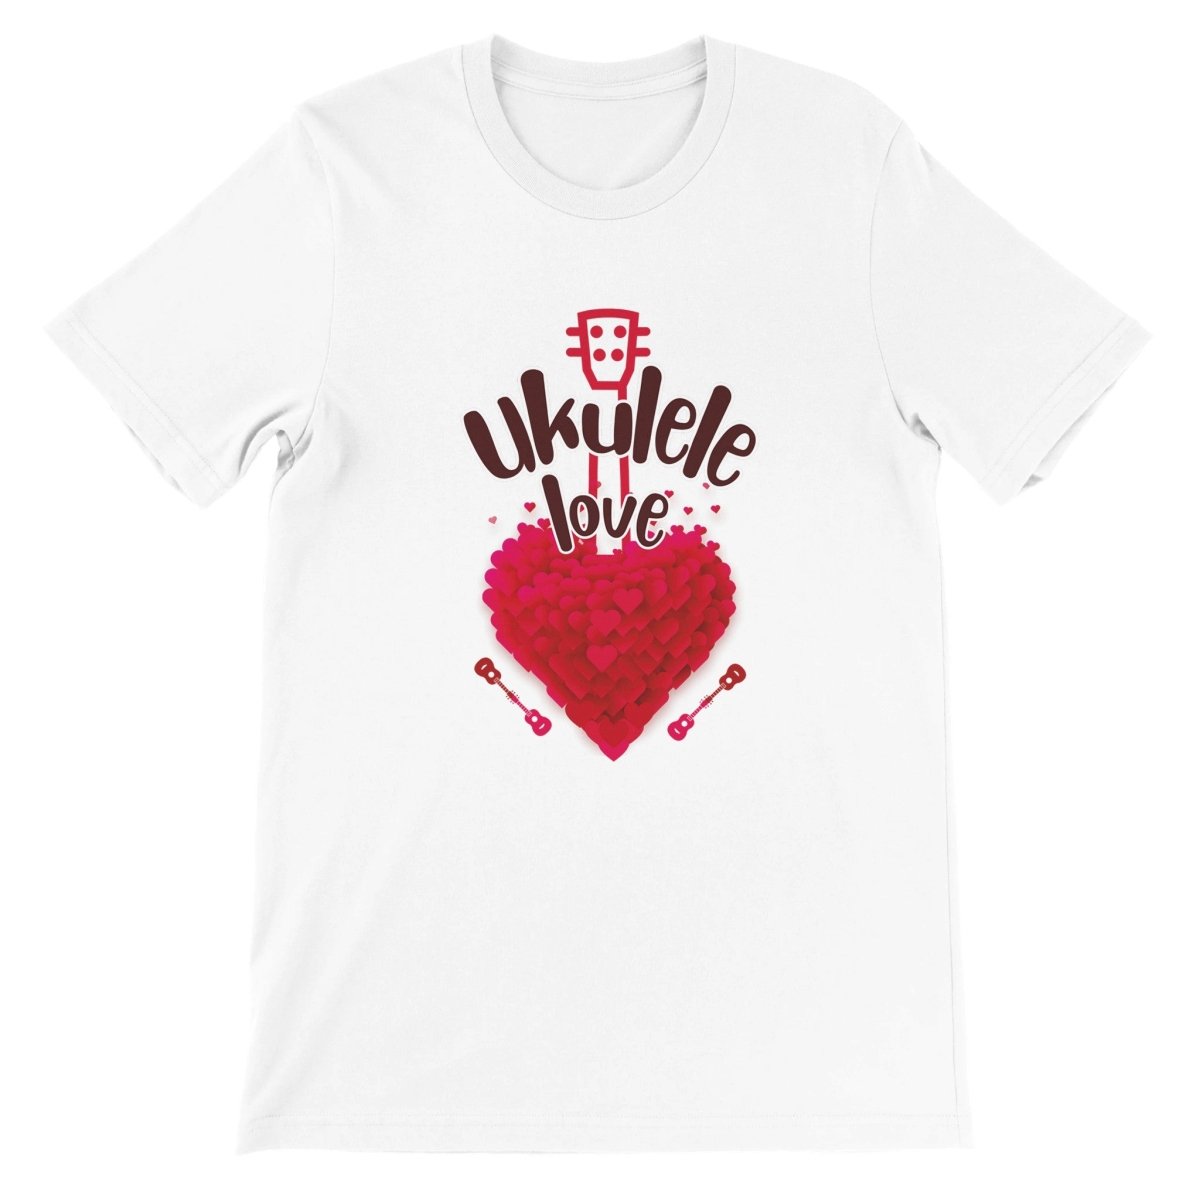 Premium 'Uke Love' Unisex Crewneck T-shirt - Uke Tastic - S - Free Delivery - Uke Tastic